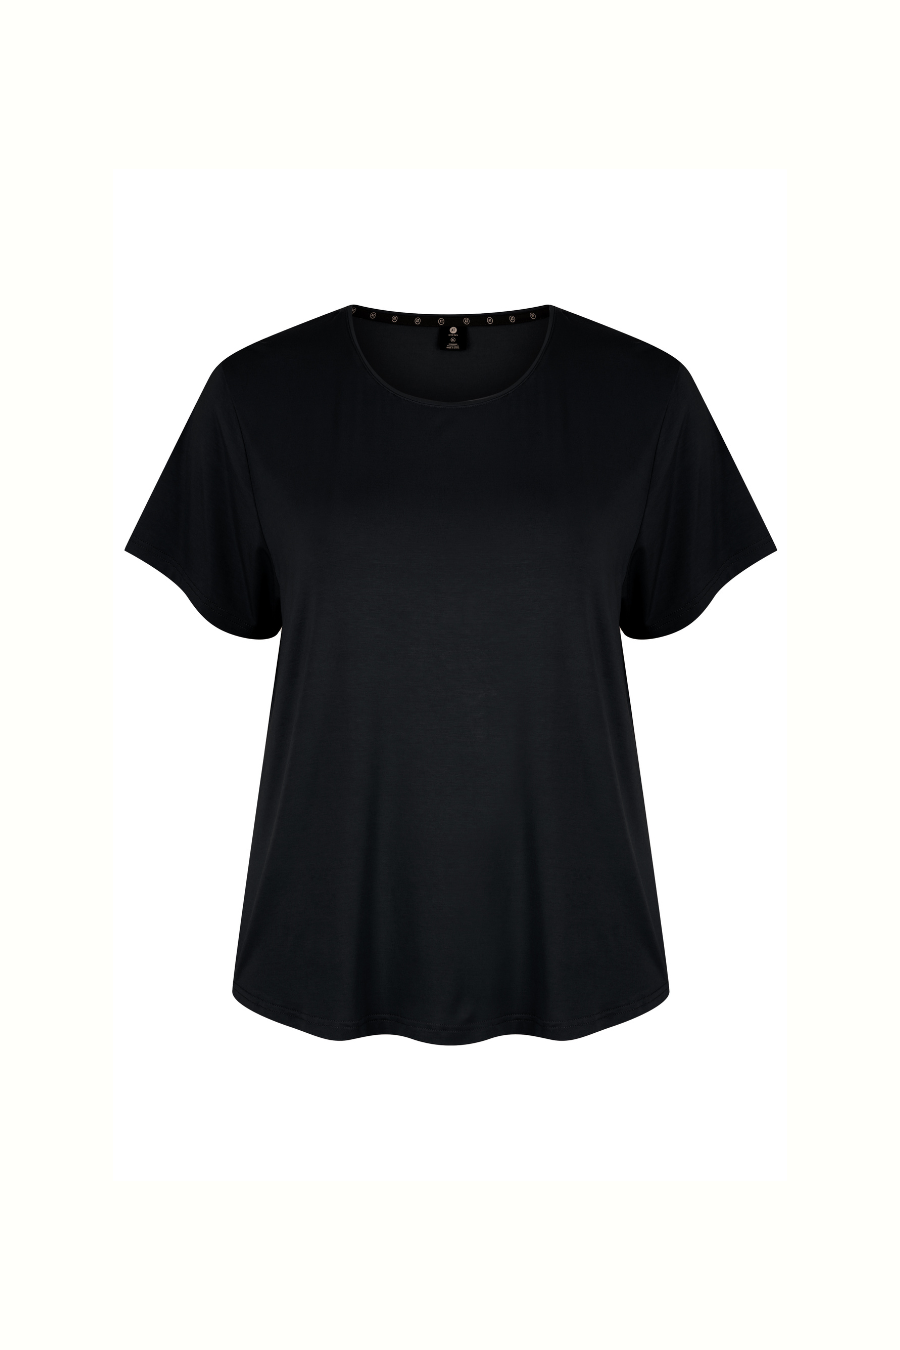 Classic Bamboo T-Shirt - Black